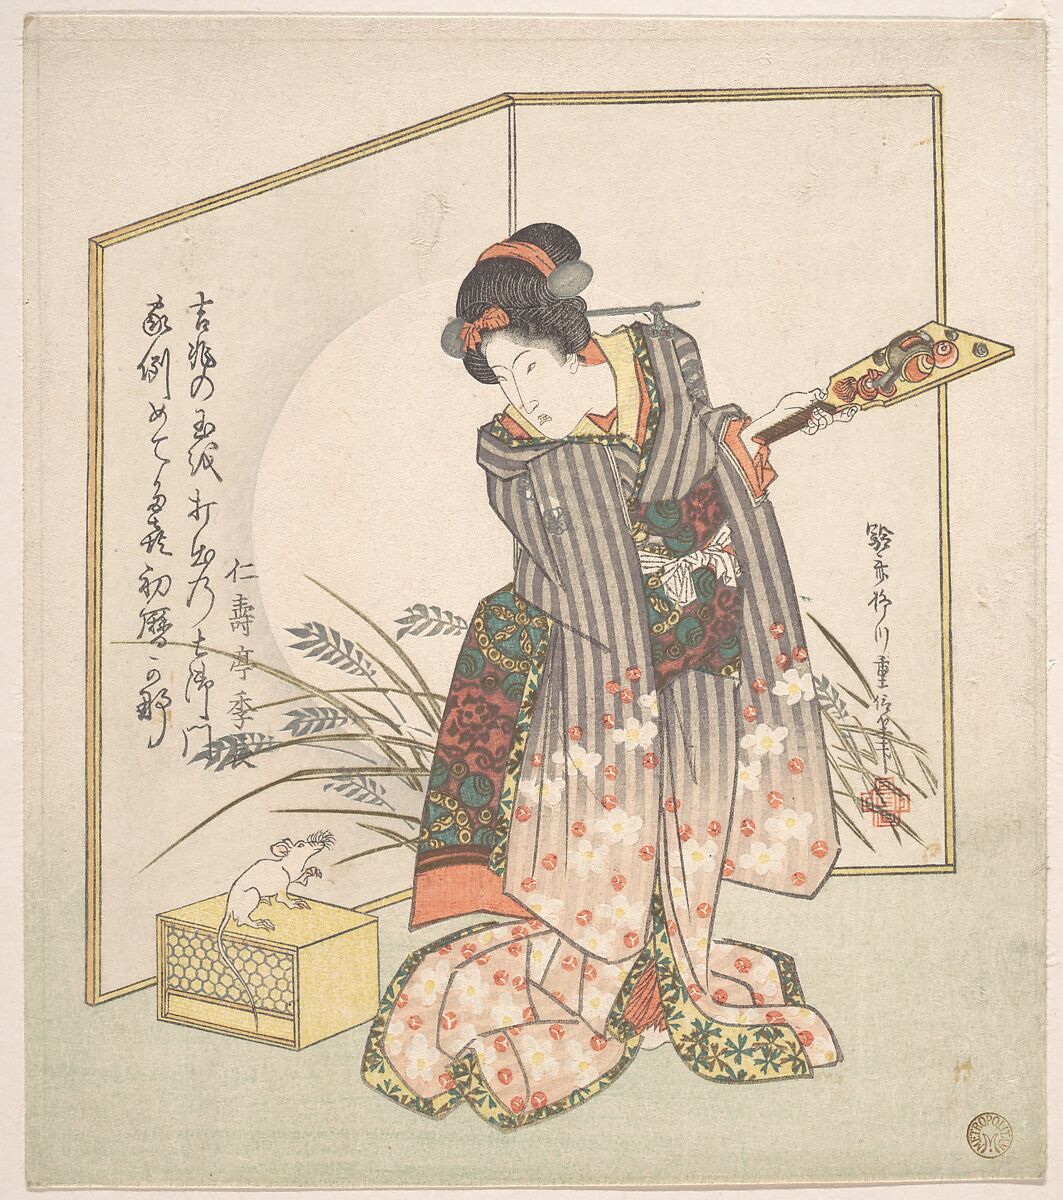 New Year Greeting Card for "Rat" Year, Yanagawa Shigenobu (Japanese, 1787–1832), Woodblock print (surimono); ink and color on paper, Japan 